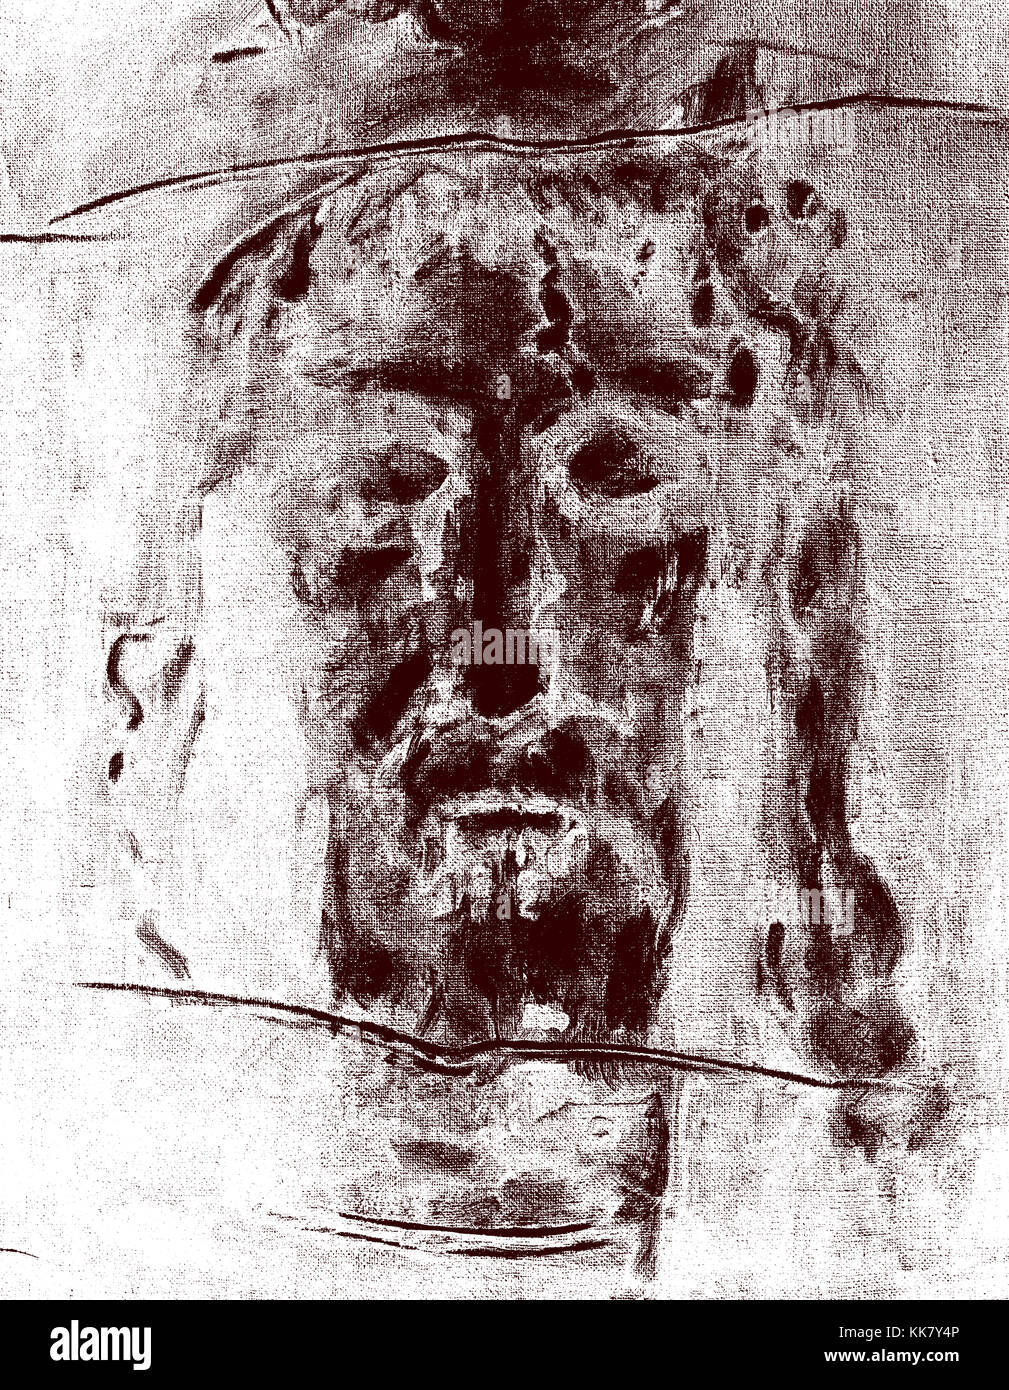 Of face shroud jesus THE SHROUD